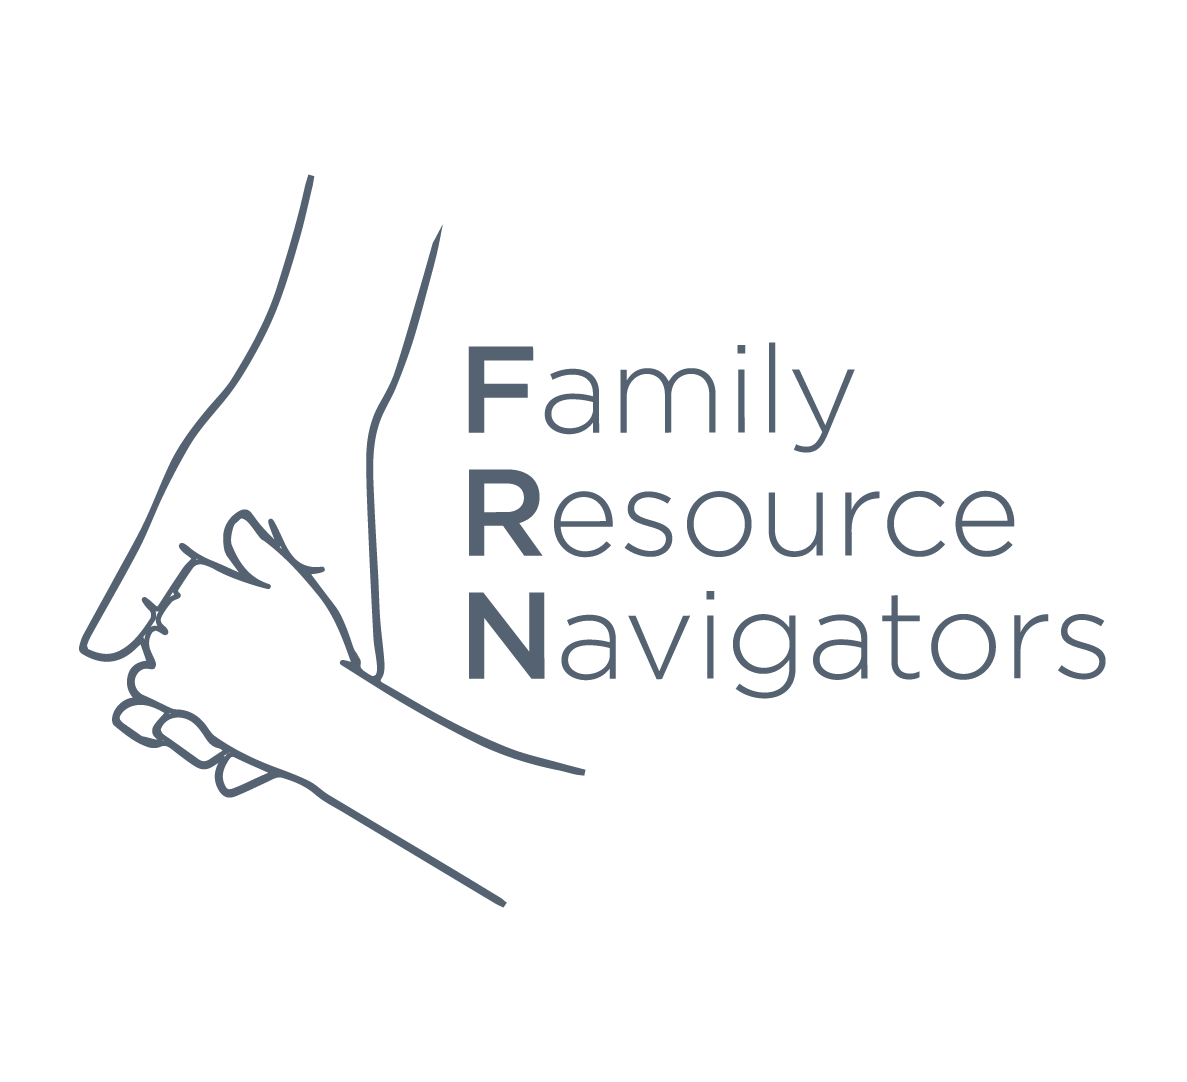 Home - Family Resource Navigators